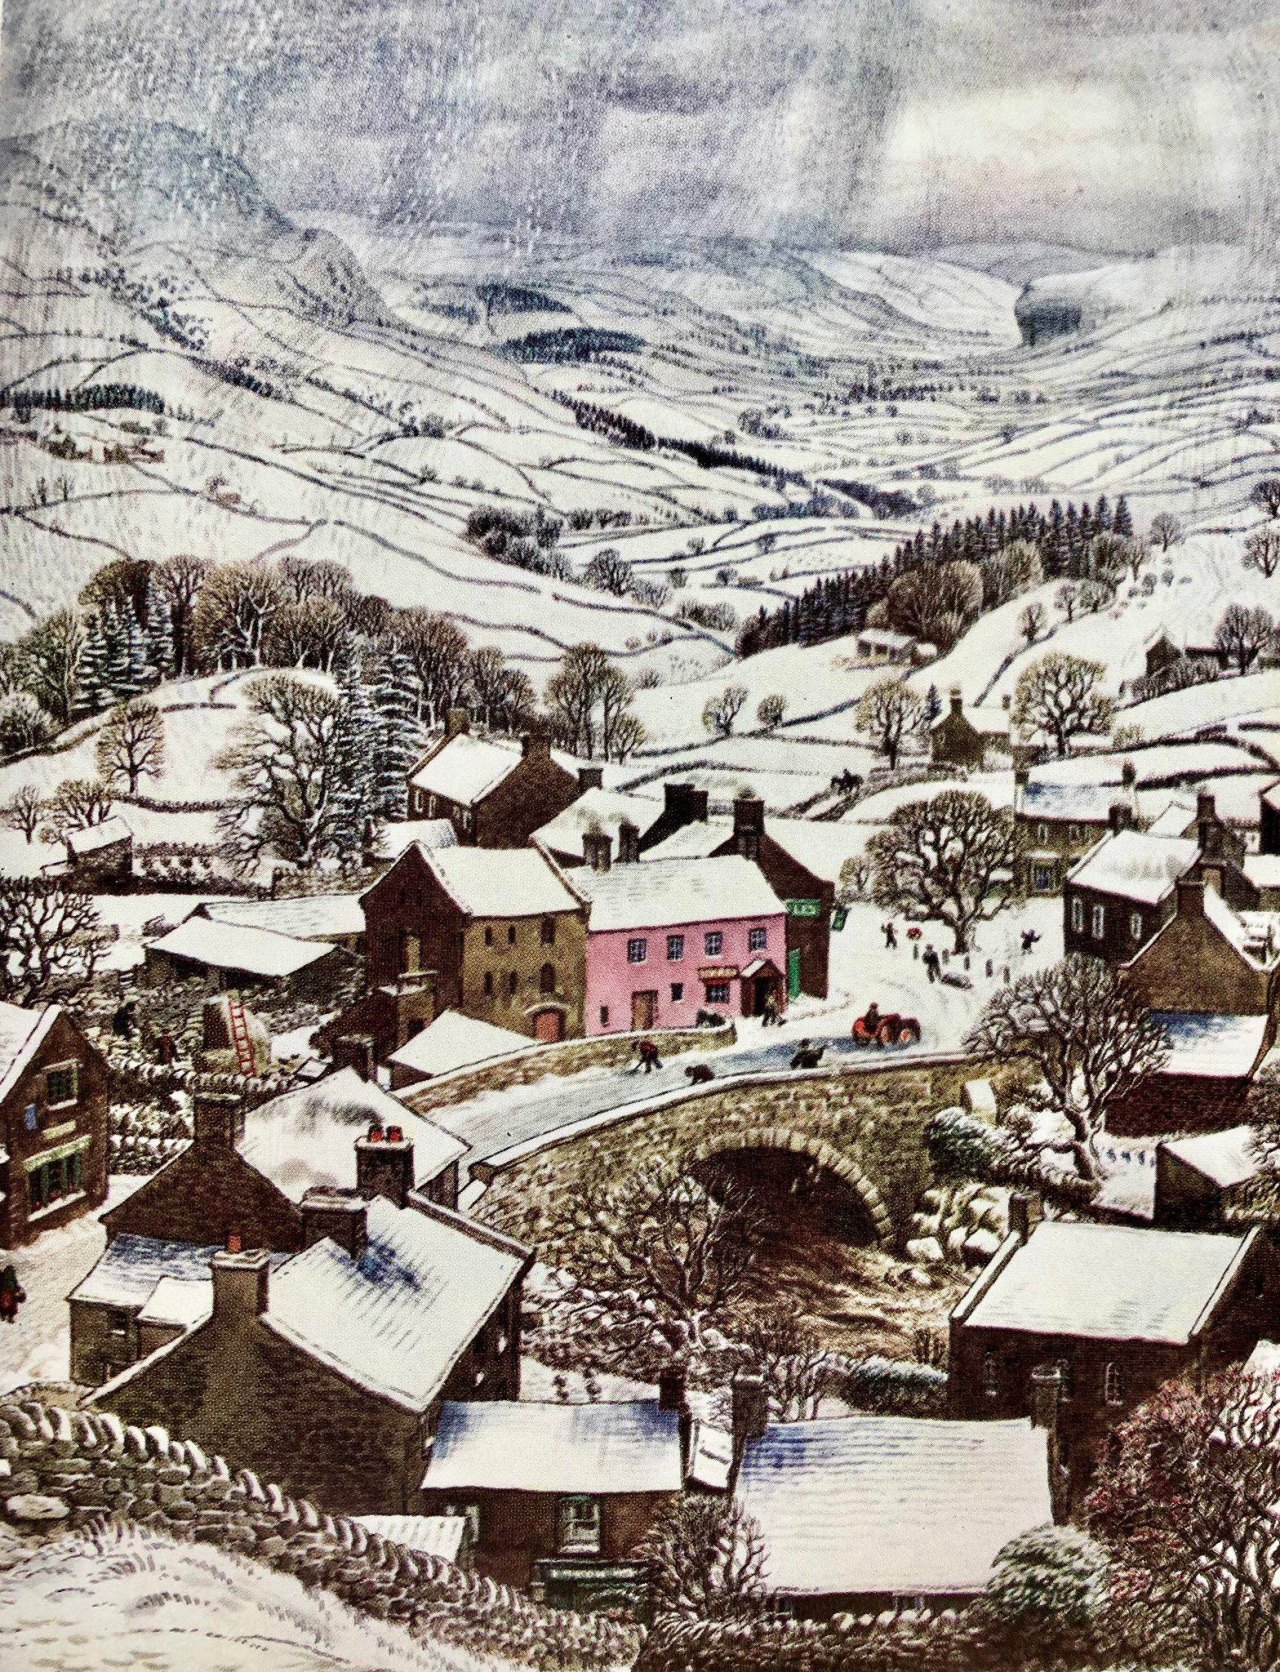 “Snowstorm in a Pennine Valley” #ladybird books#Illustration#england#winter#snow#white#village#yorkshire